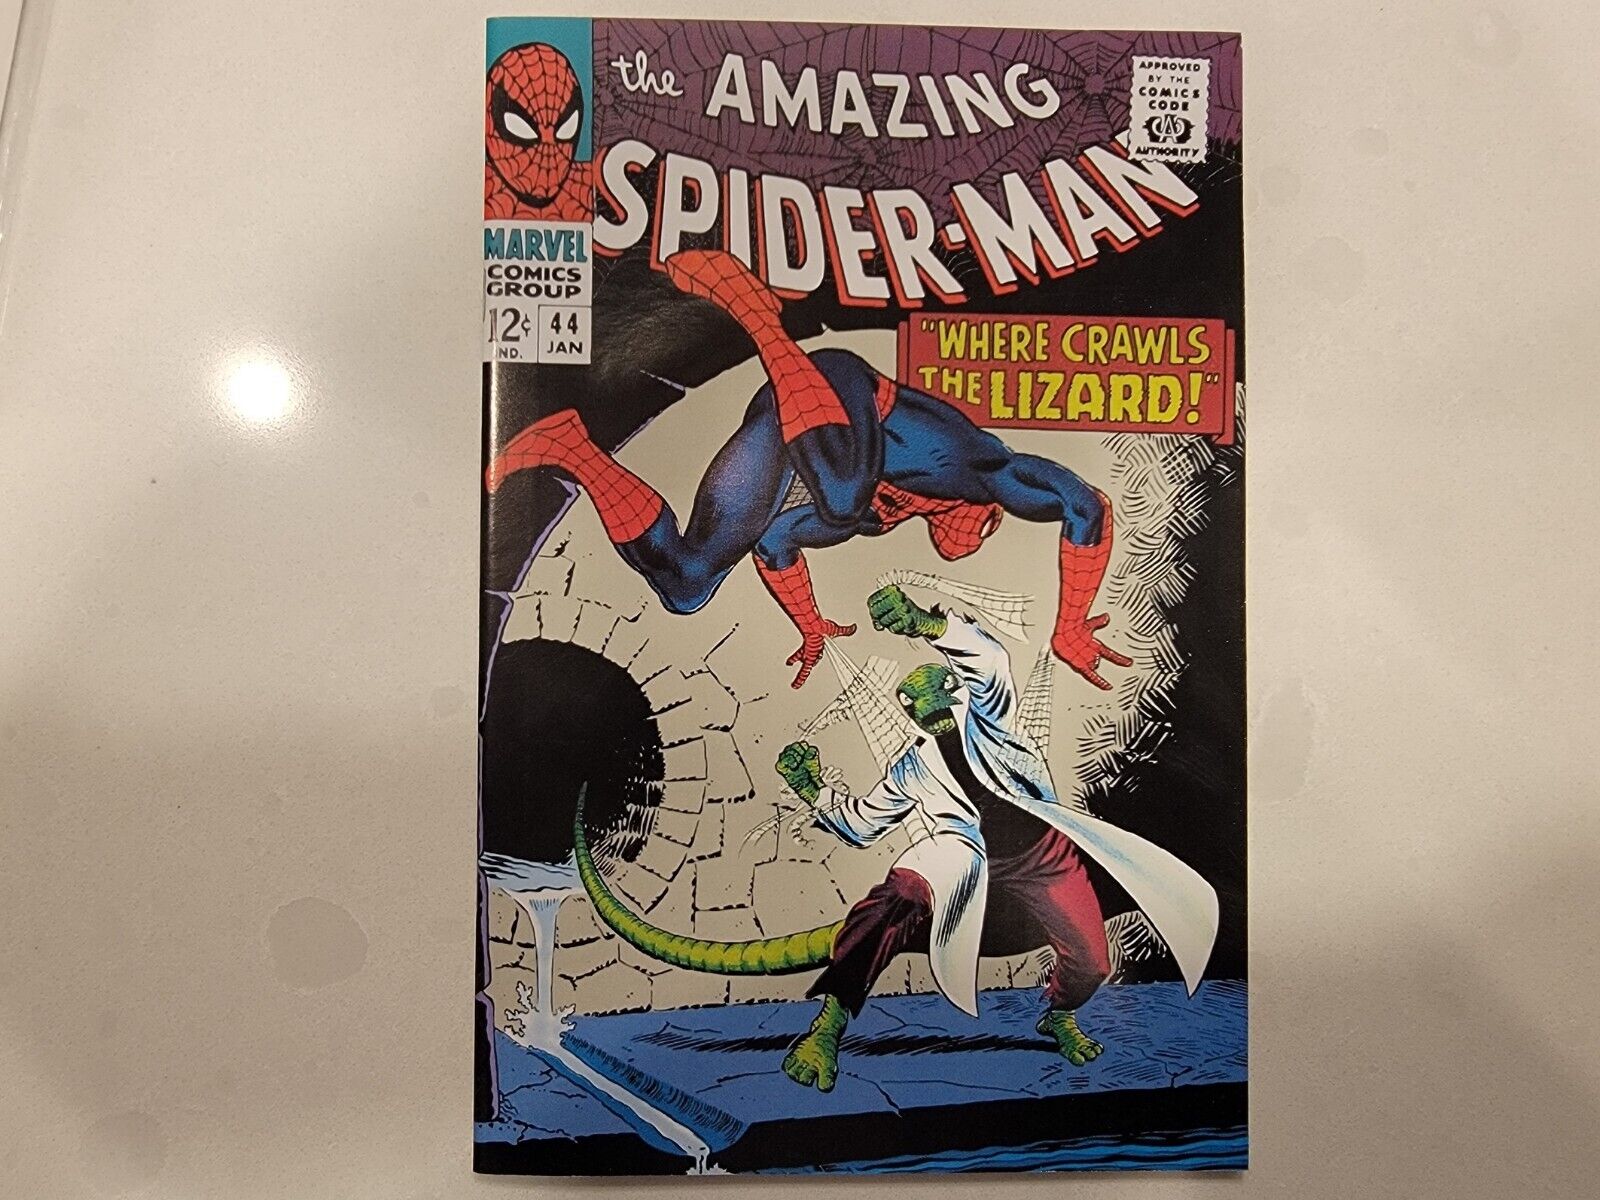 The Amazing Spider-Man #44 1966 NM Facsimile Replica Reprint Newsprint Interior